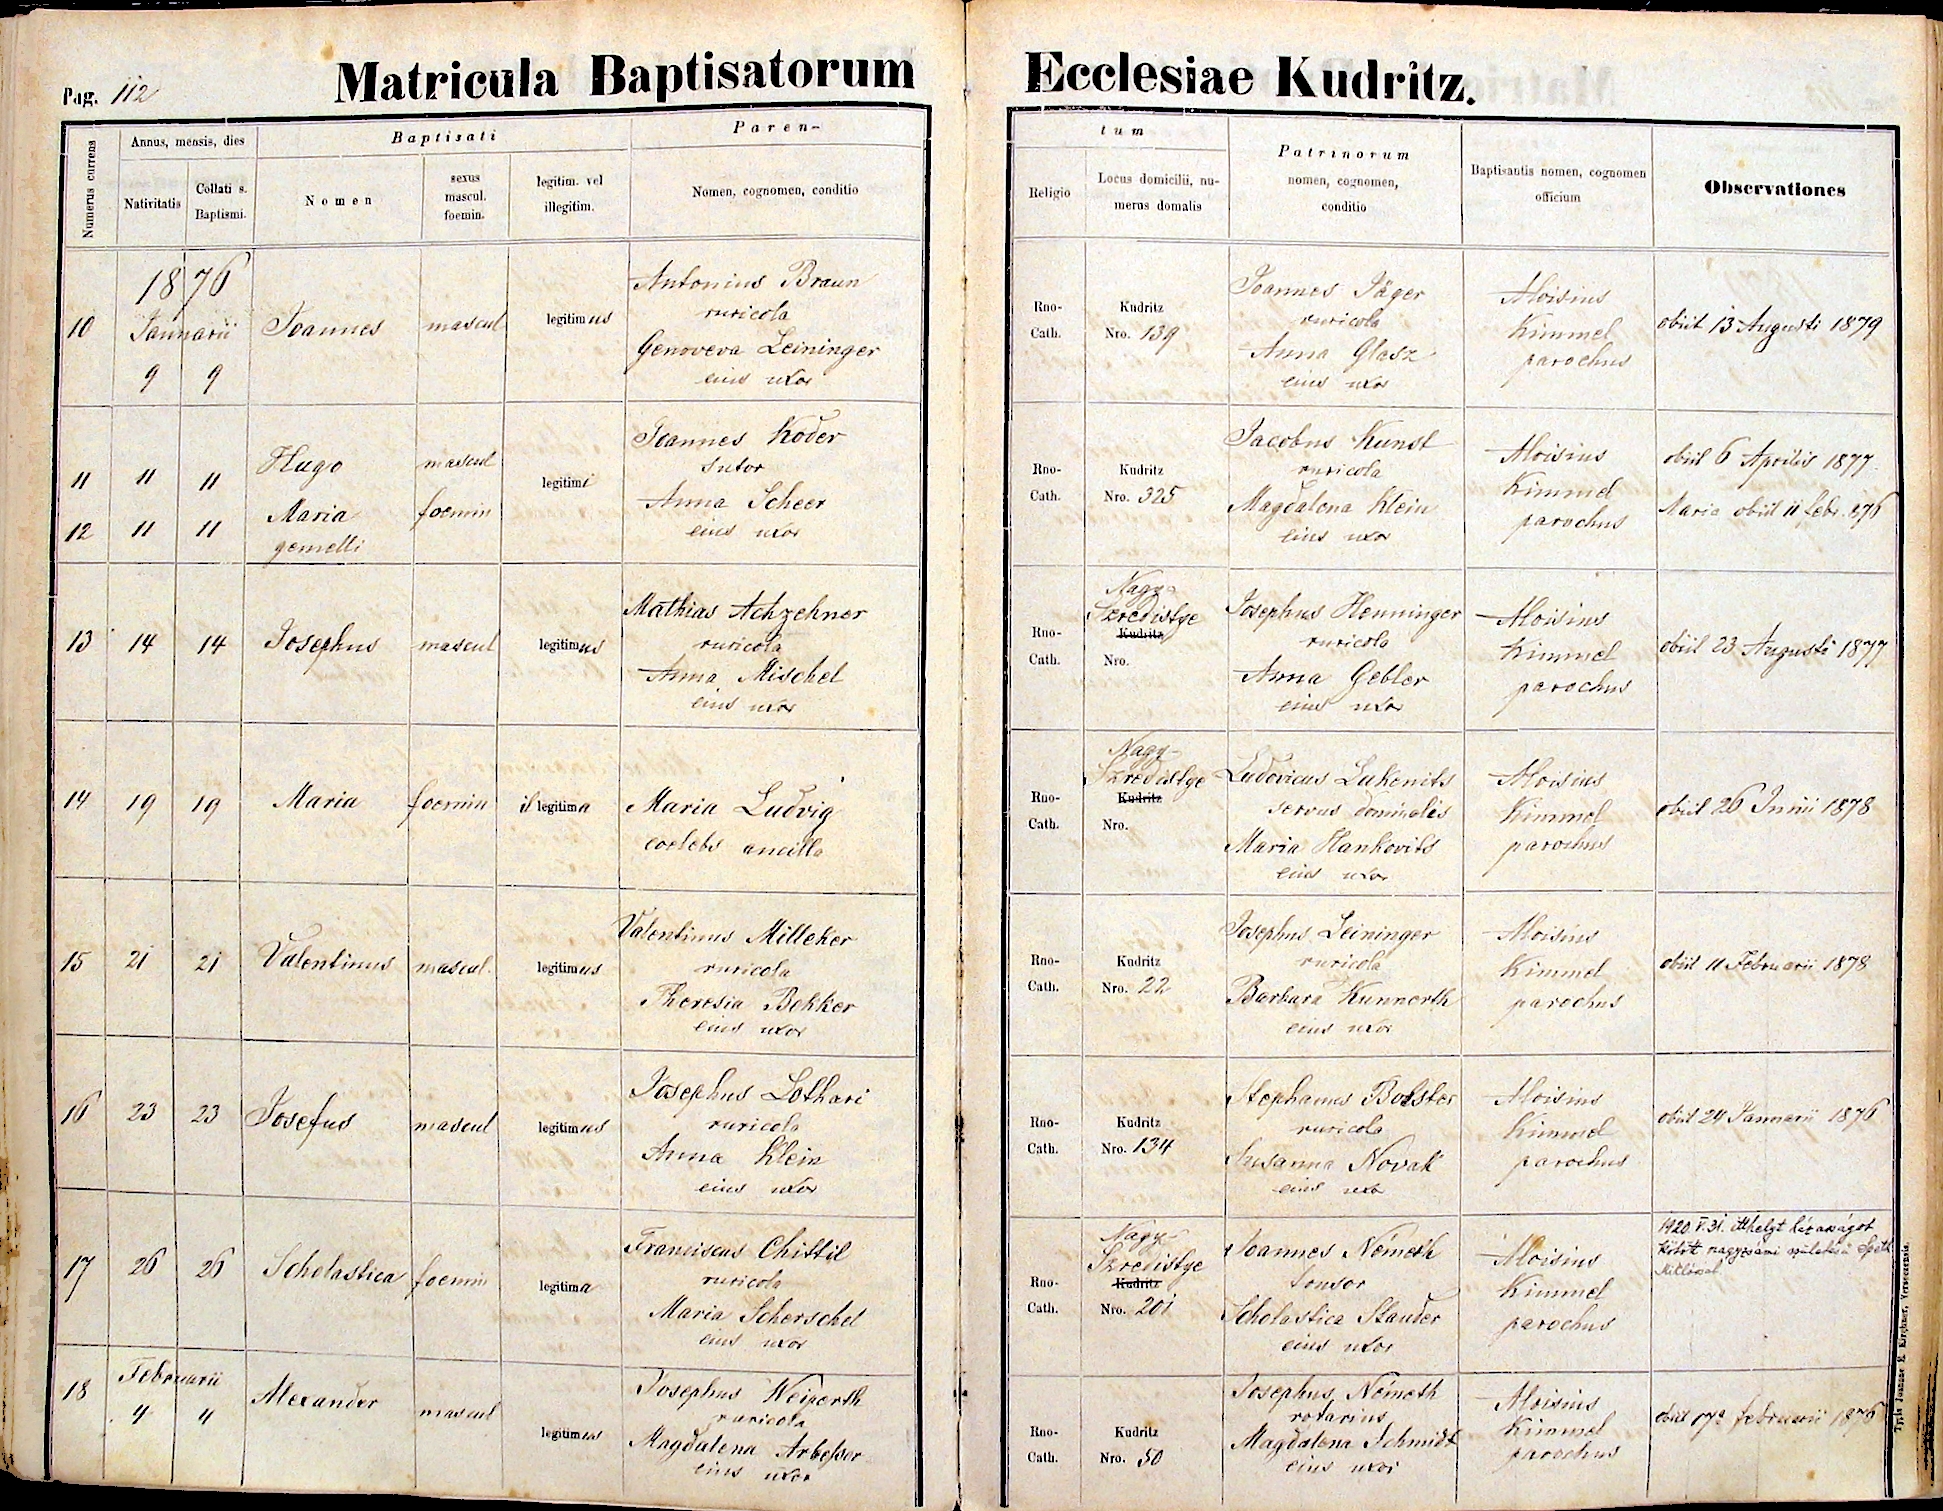 images/church_records/BIRTHS/1884-1899B/1891/112